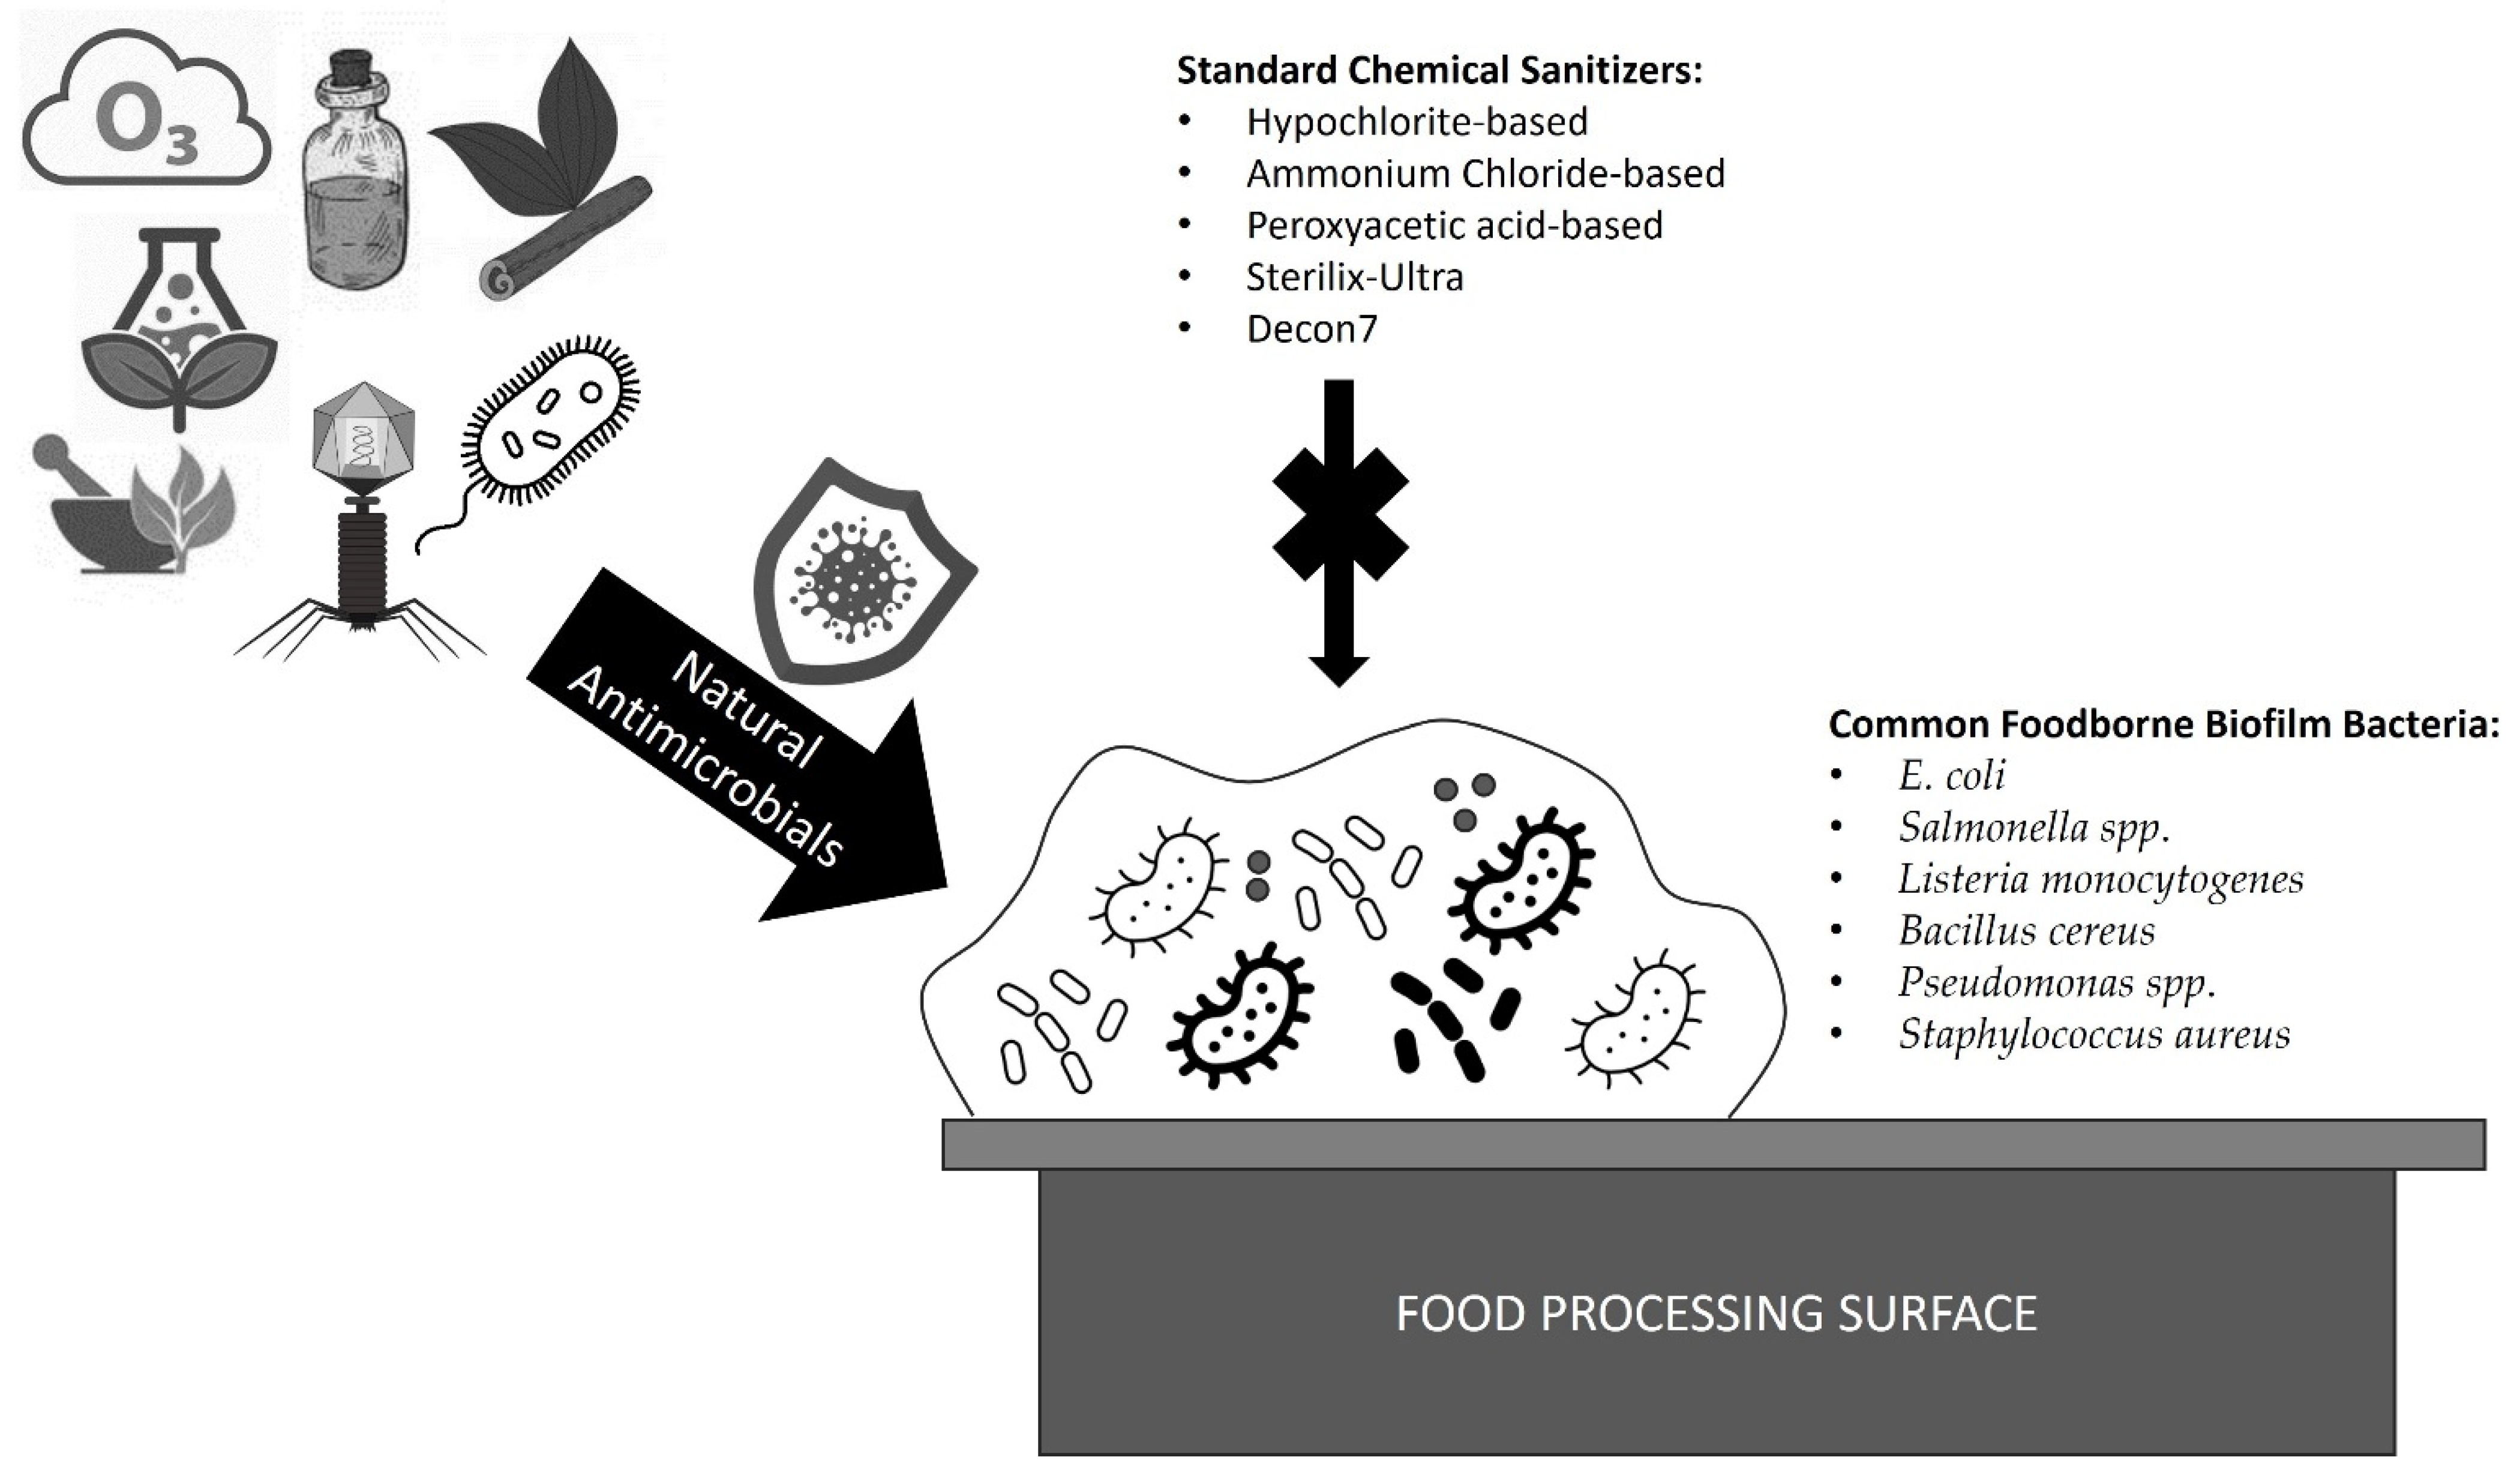 A novel strategy to enhance photocatalytic killing of foodborne